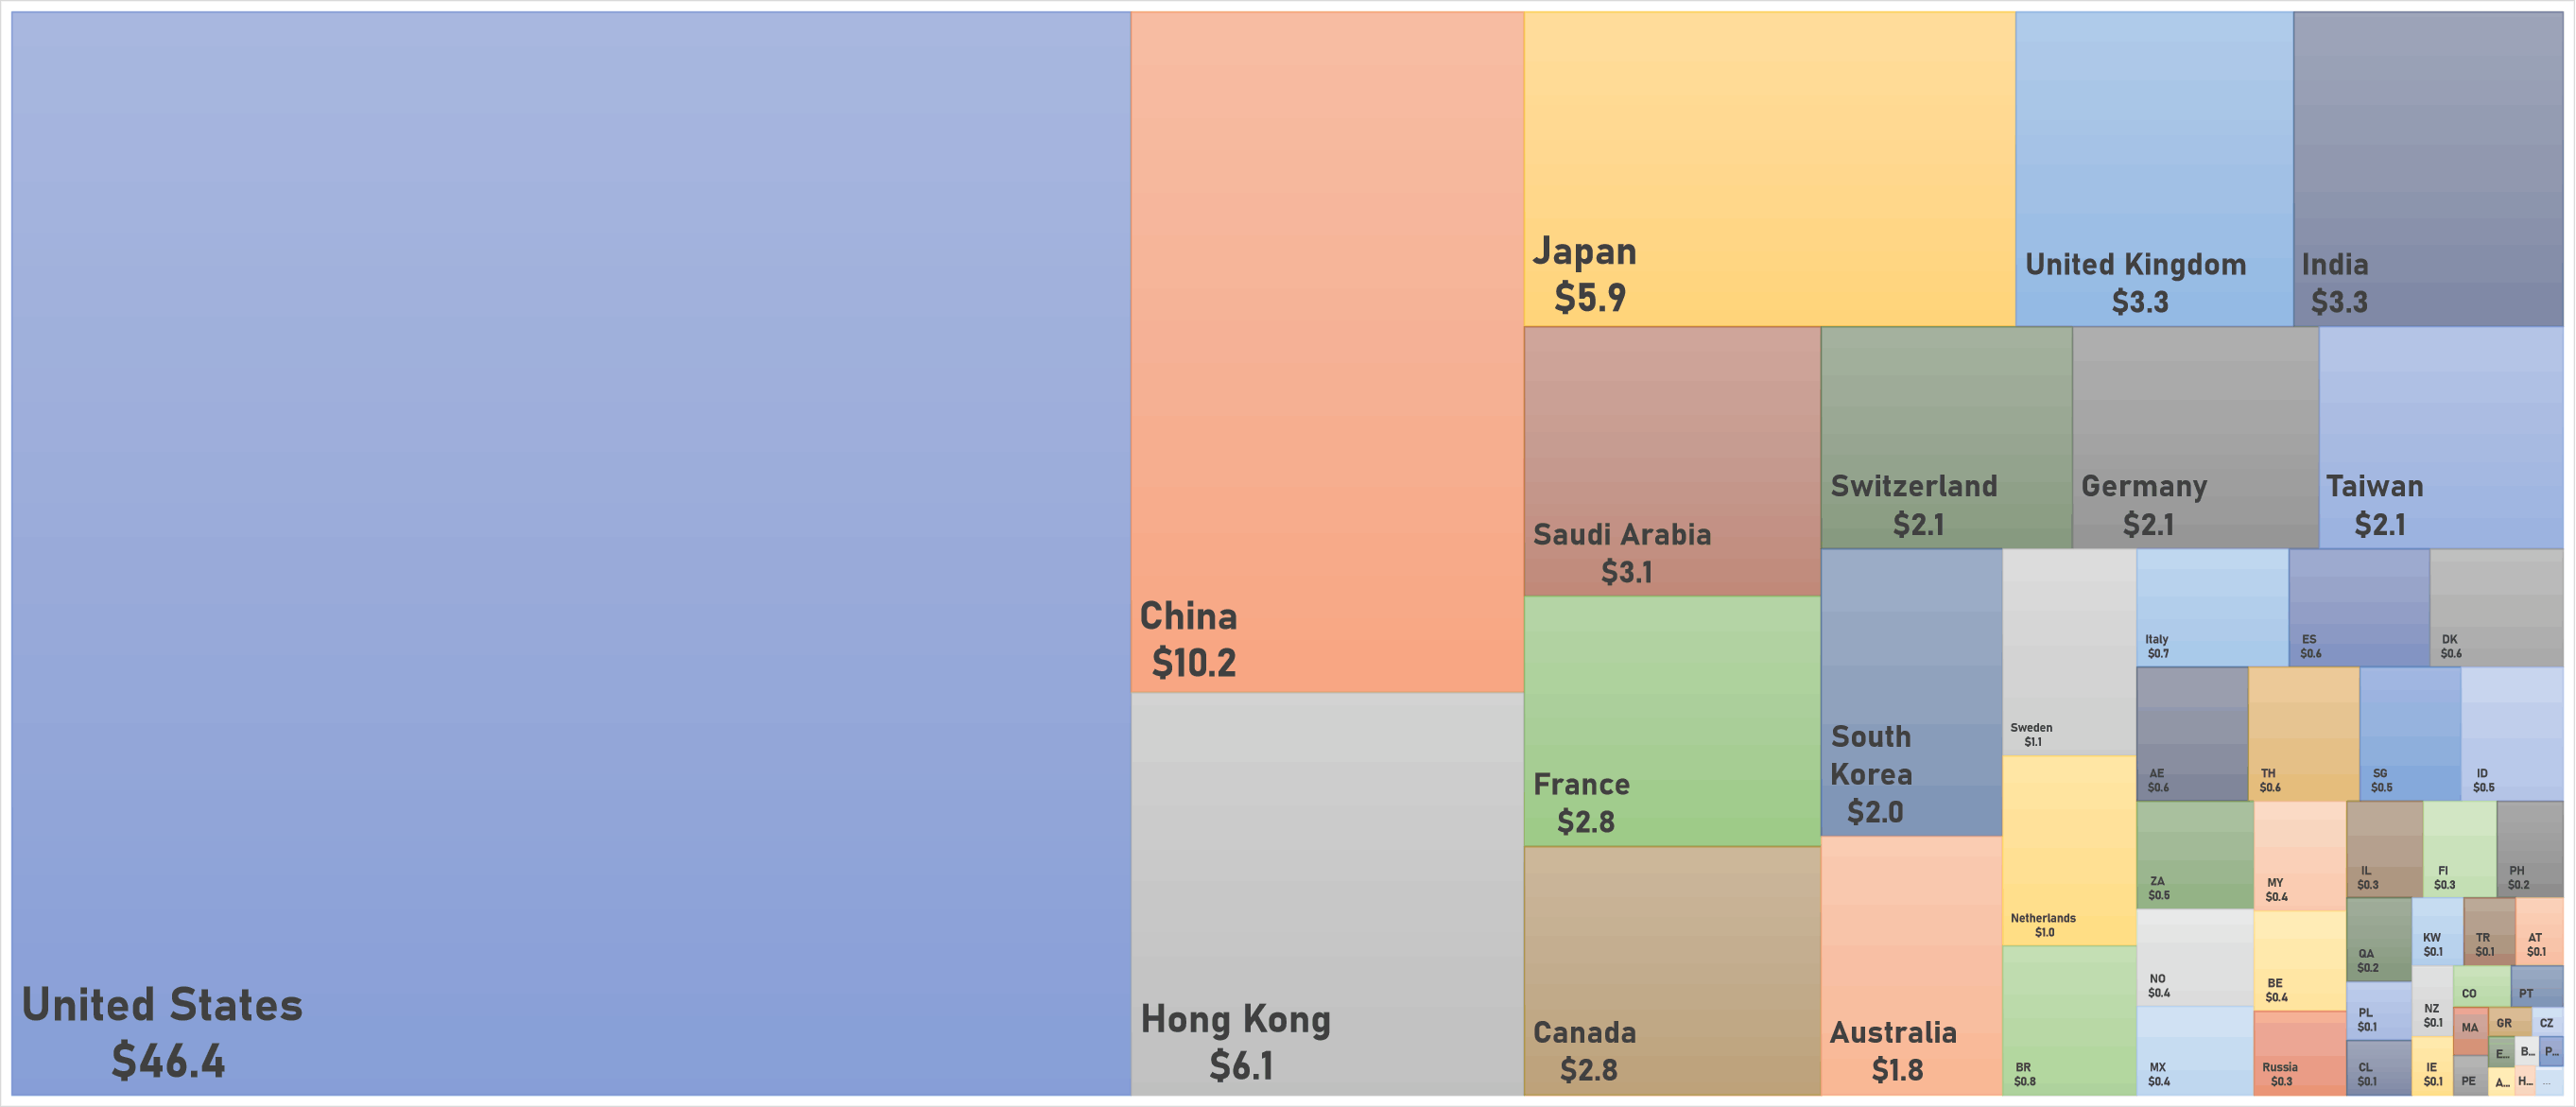 World Market Cap In USD Trillions | Sources: phipost.com, FactSet Data